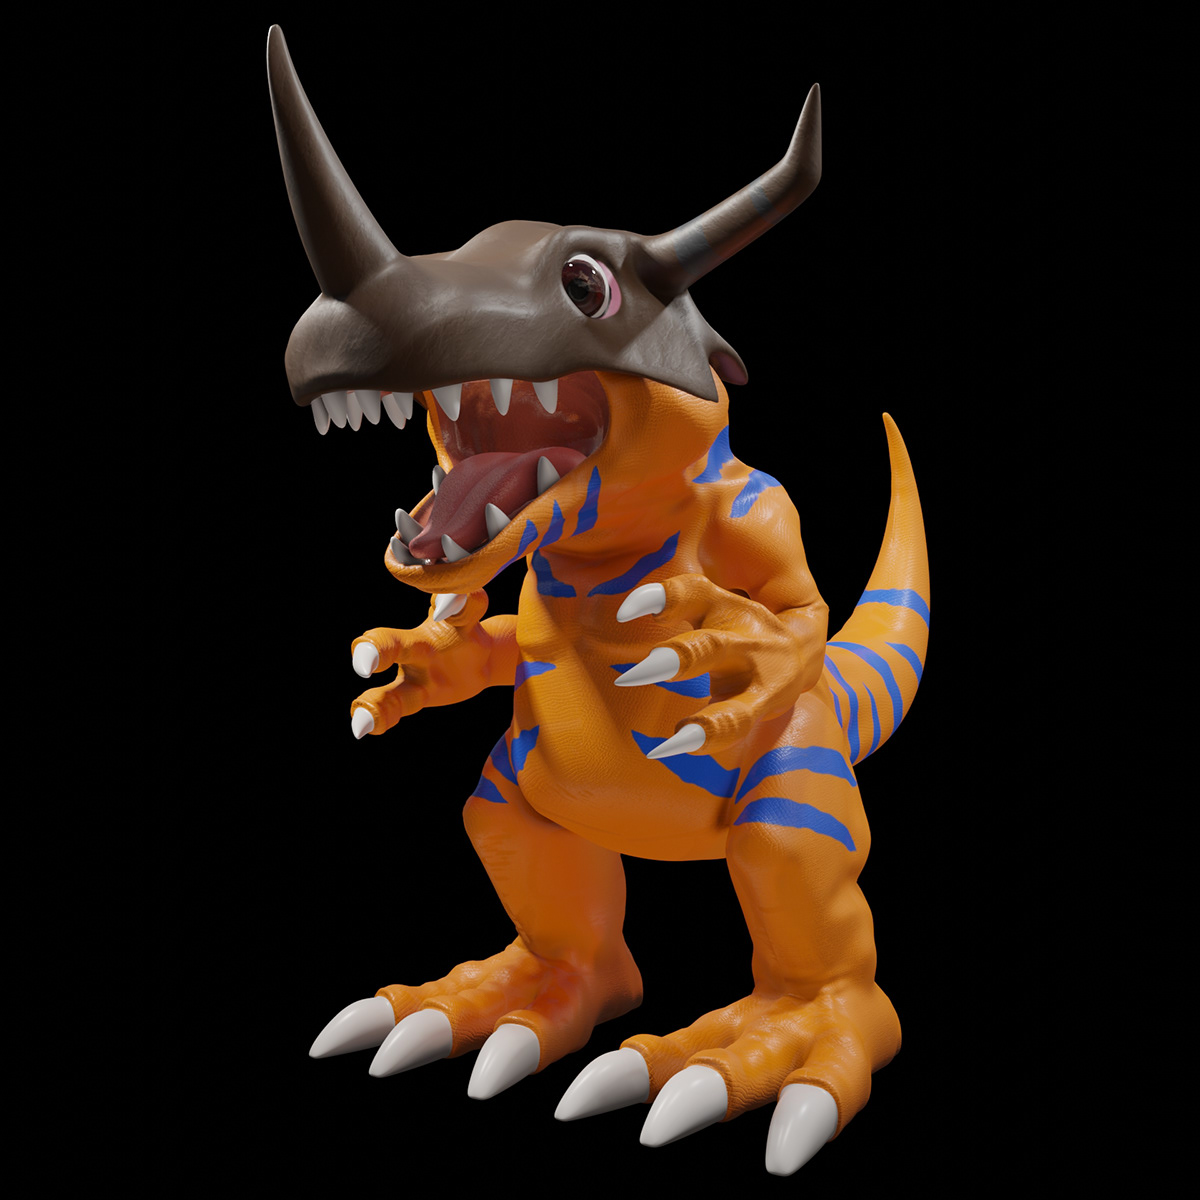 3D 3dmodeling 3dsculpting belnder Character Digimon greymon modeling Render texturing